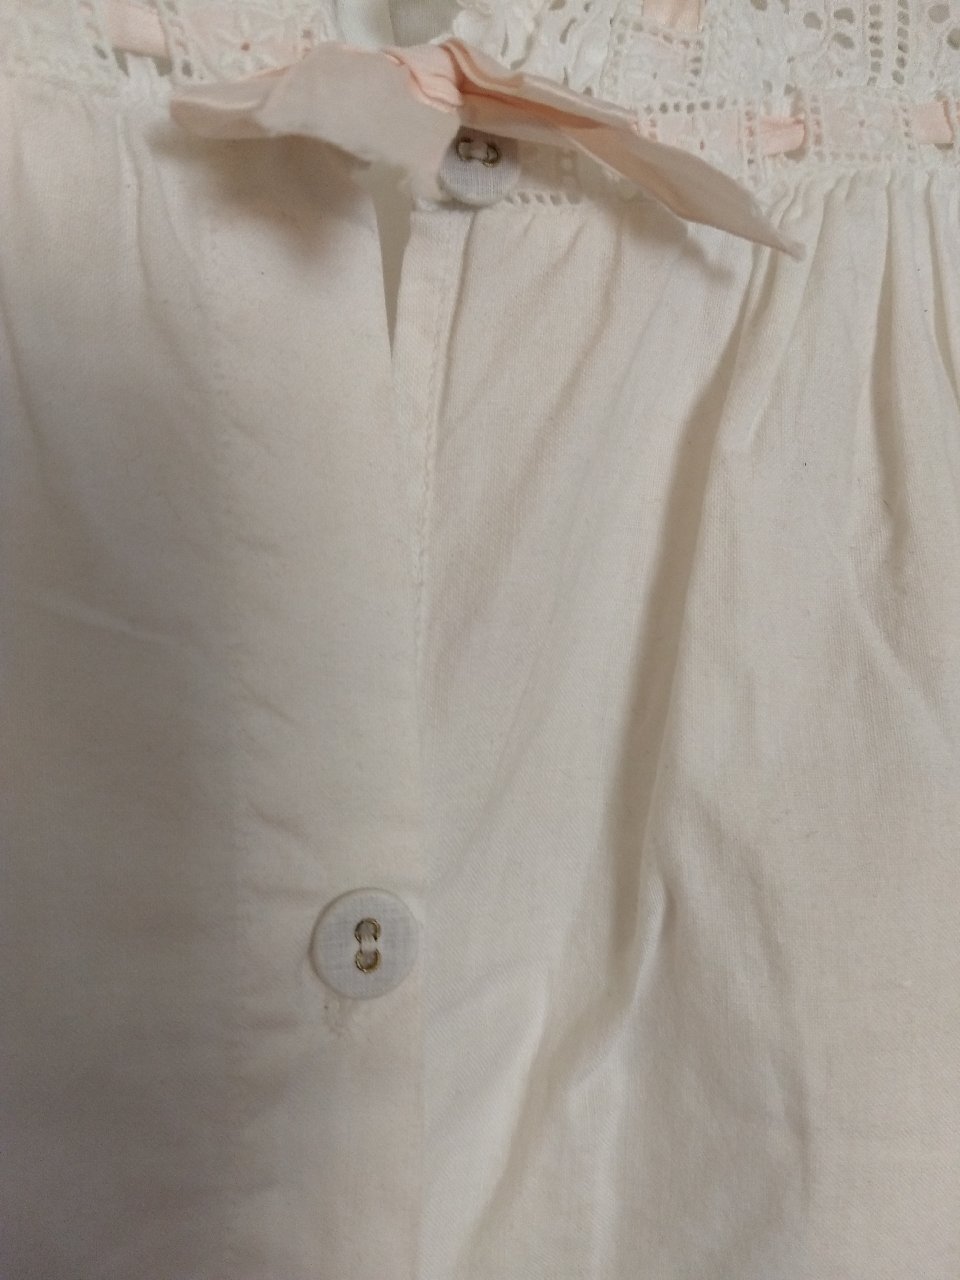 Edwardian Nightgown White Cotton Eyelet Yoke Long Sleeves Silk Ribbon ...